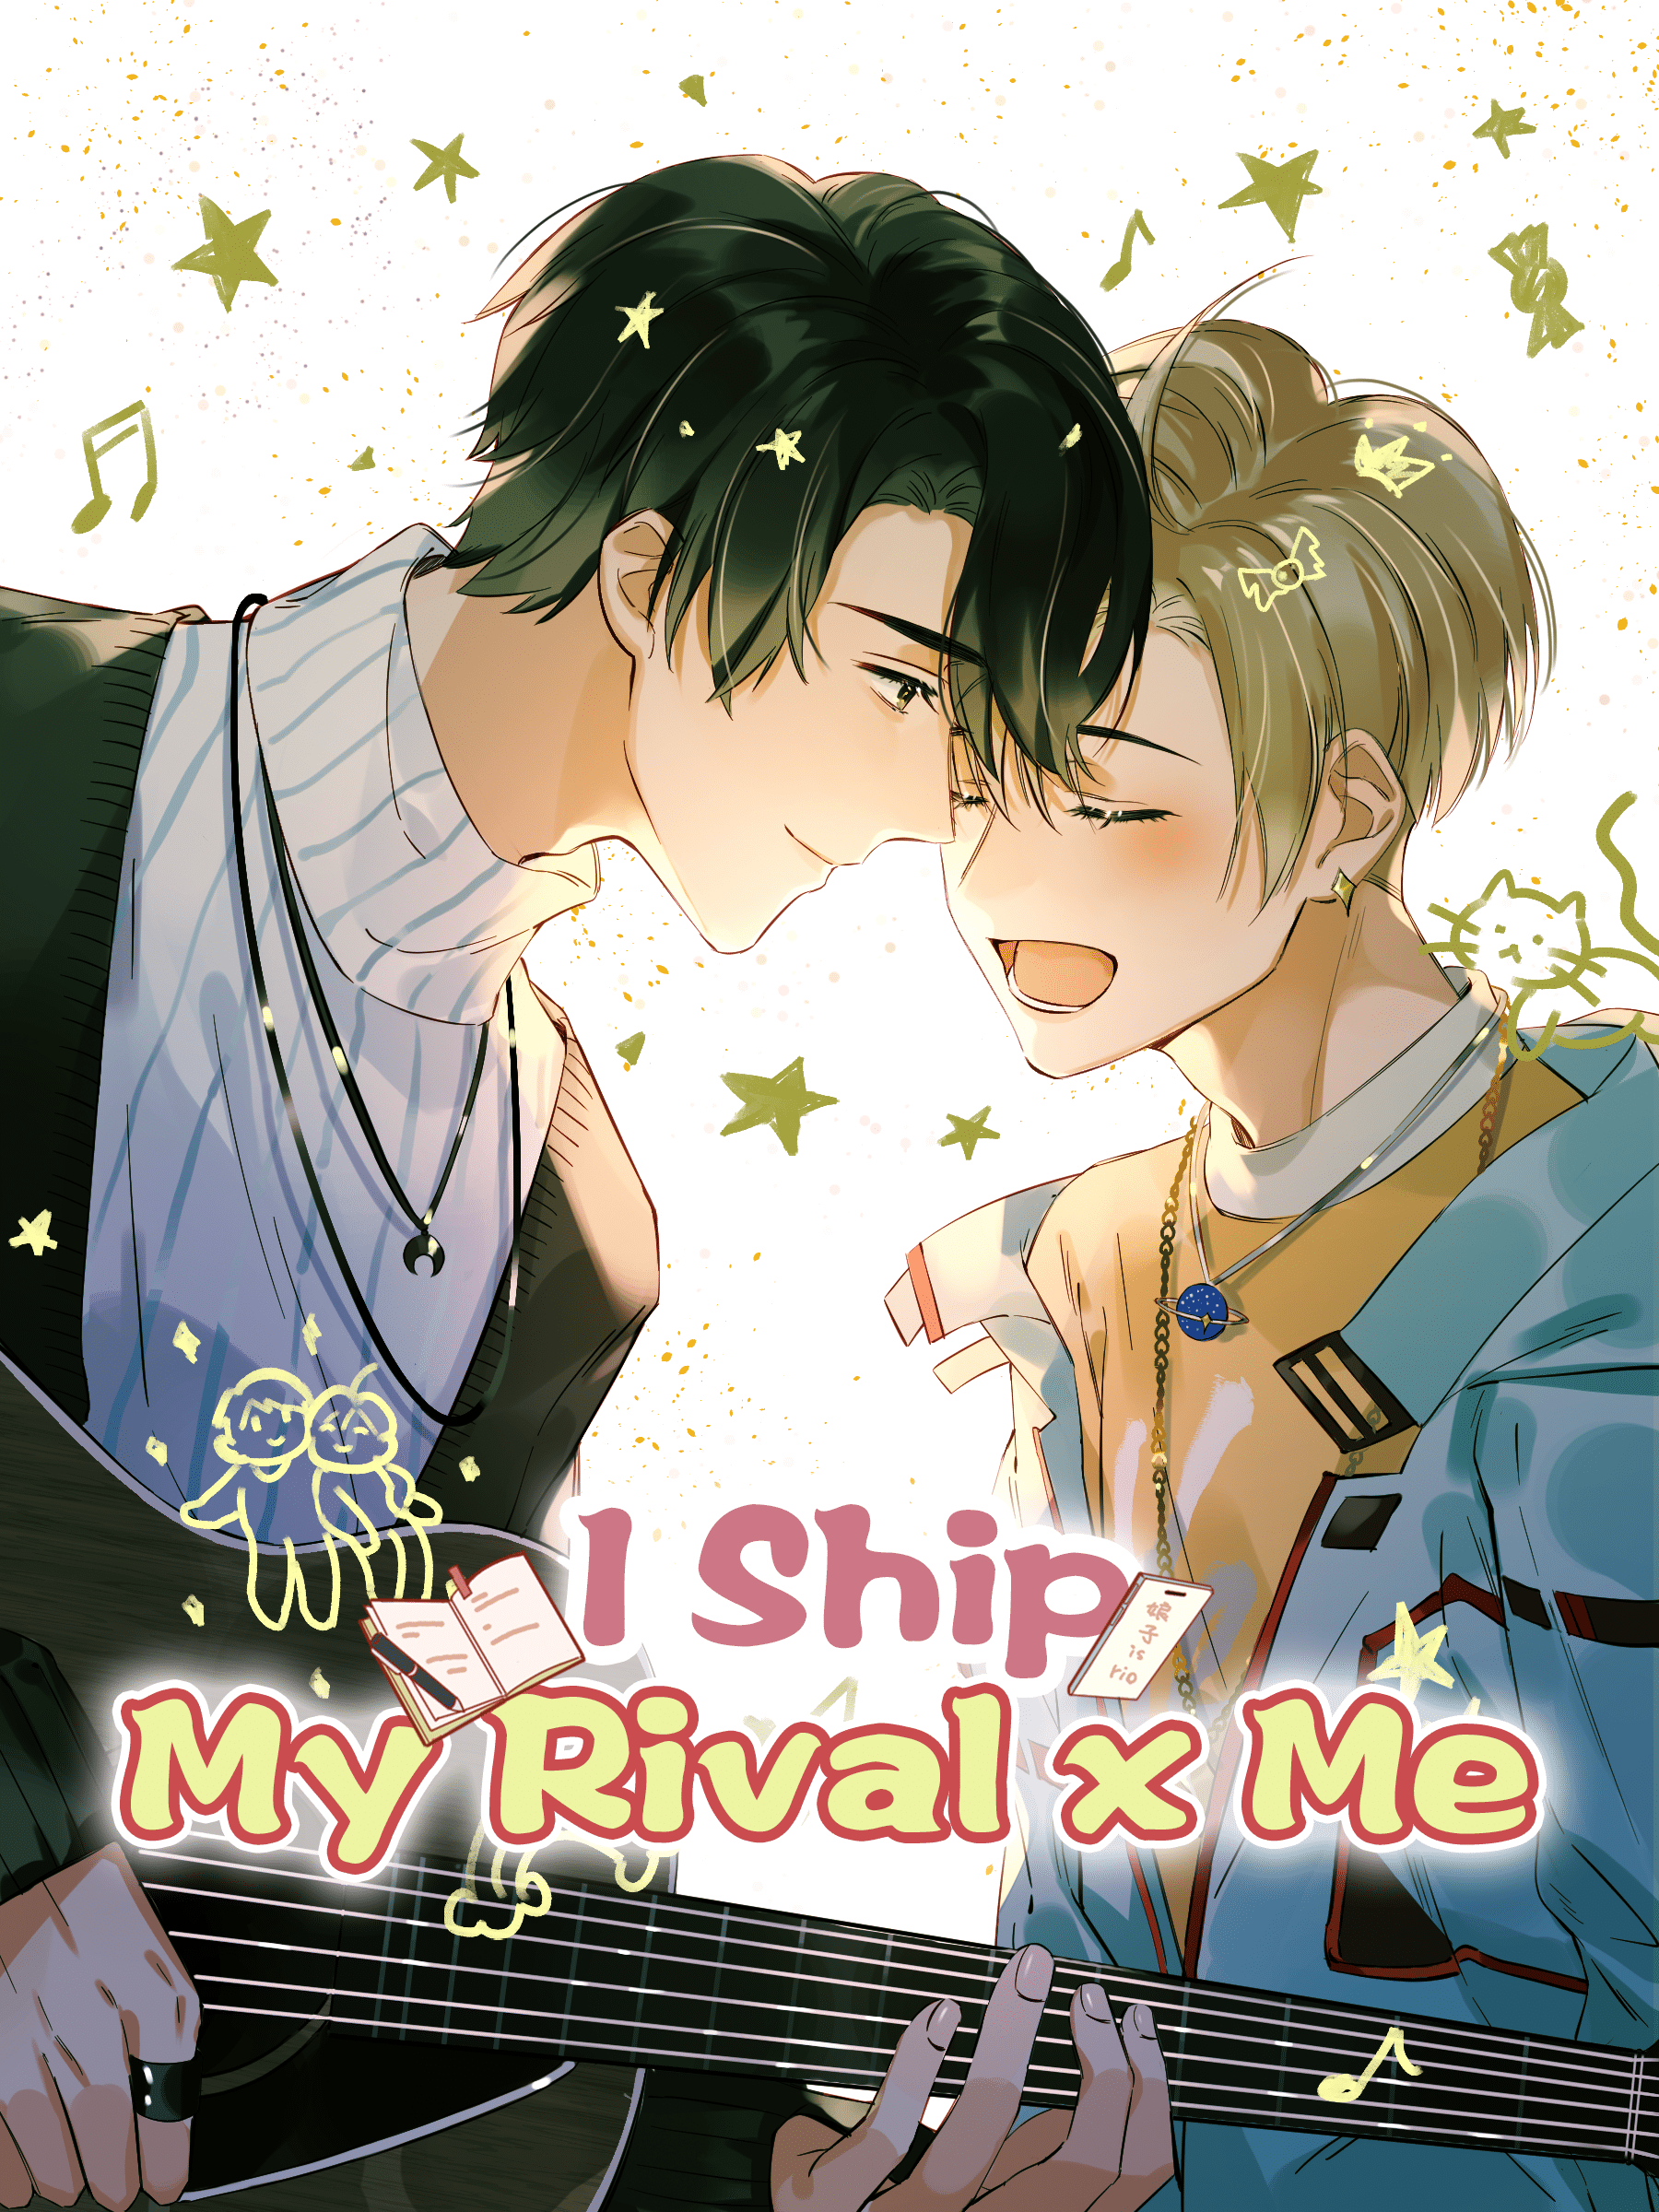 I Ship My Rival x Me – ปฏิบัติการเปลี่ยนคู่แข่งมาเป็นคู่จิ้น